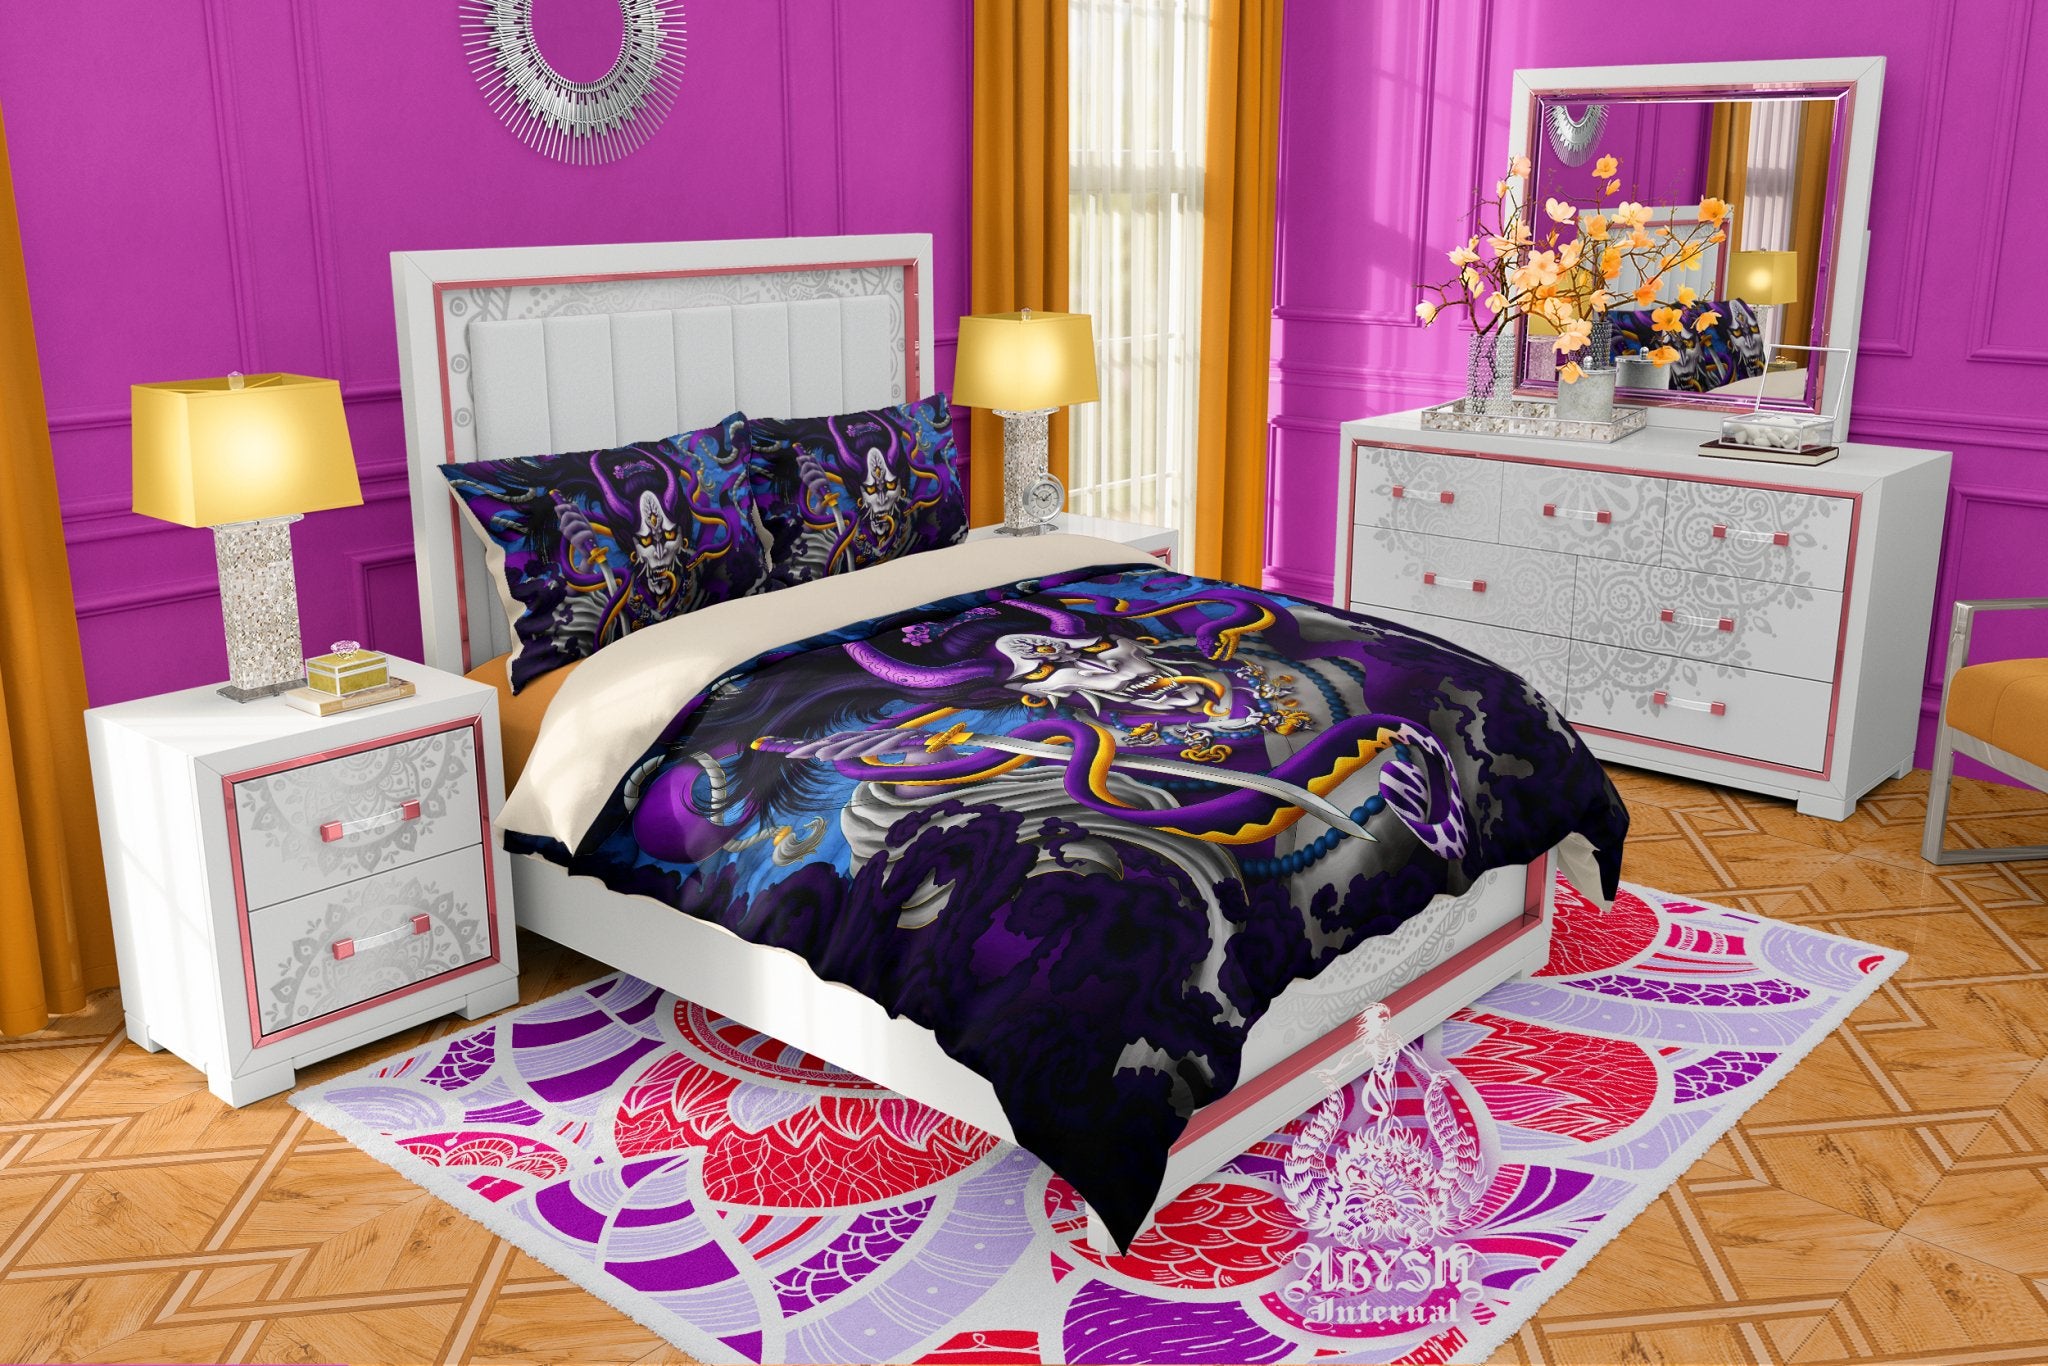 Hannya Bedding Set, Comforter or Duvet, Anime Bed Cover, Japanese Demon Bedroom Decor, King, Queen & Twin Size - Snake, Blue Purple - Abysm Internal